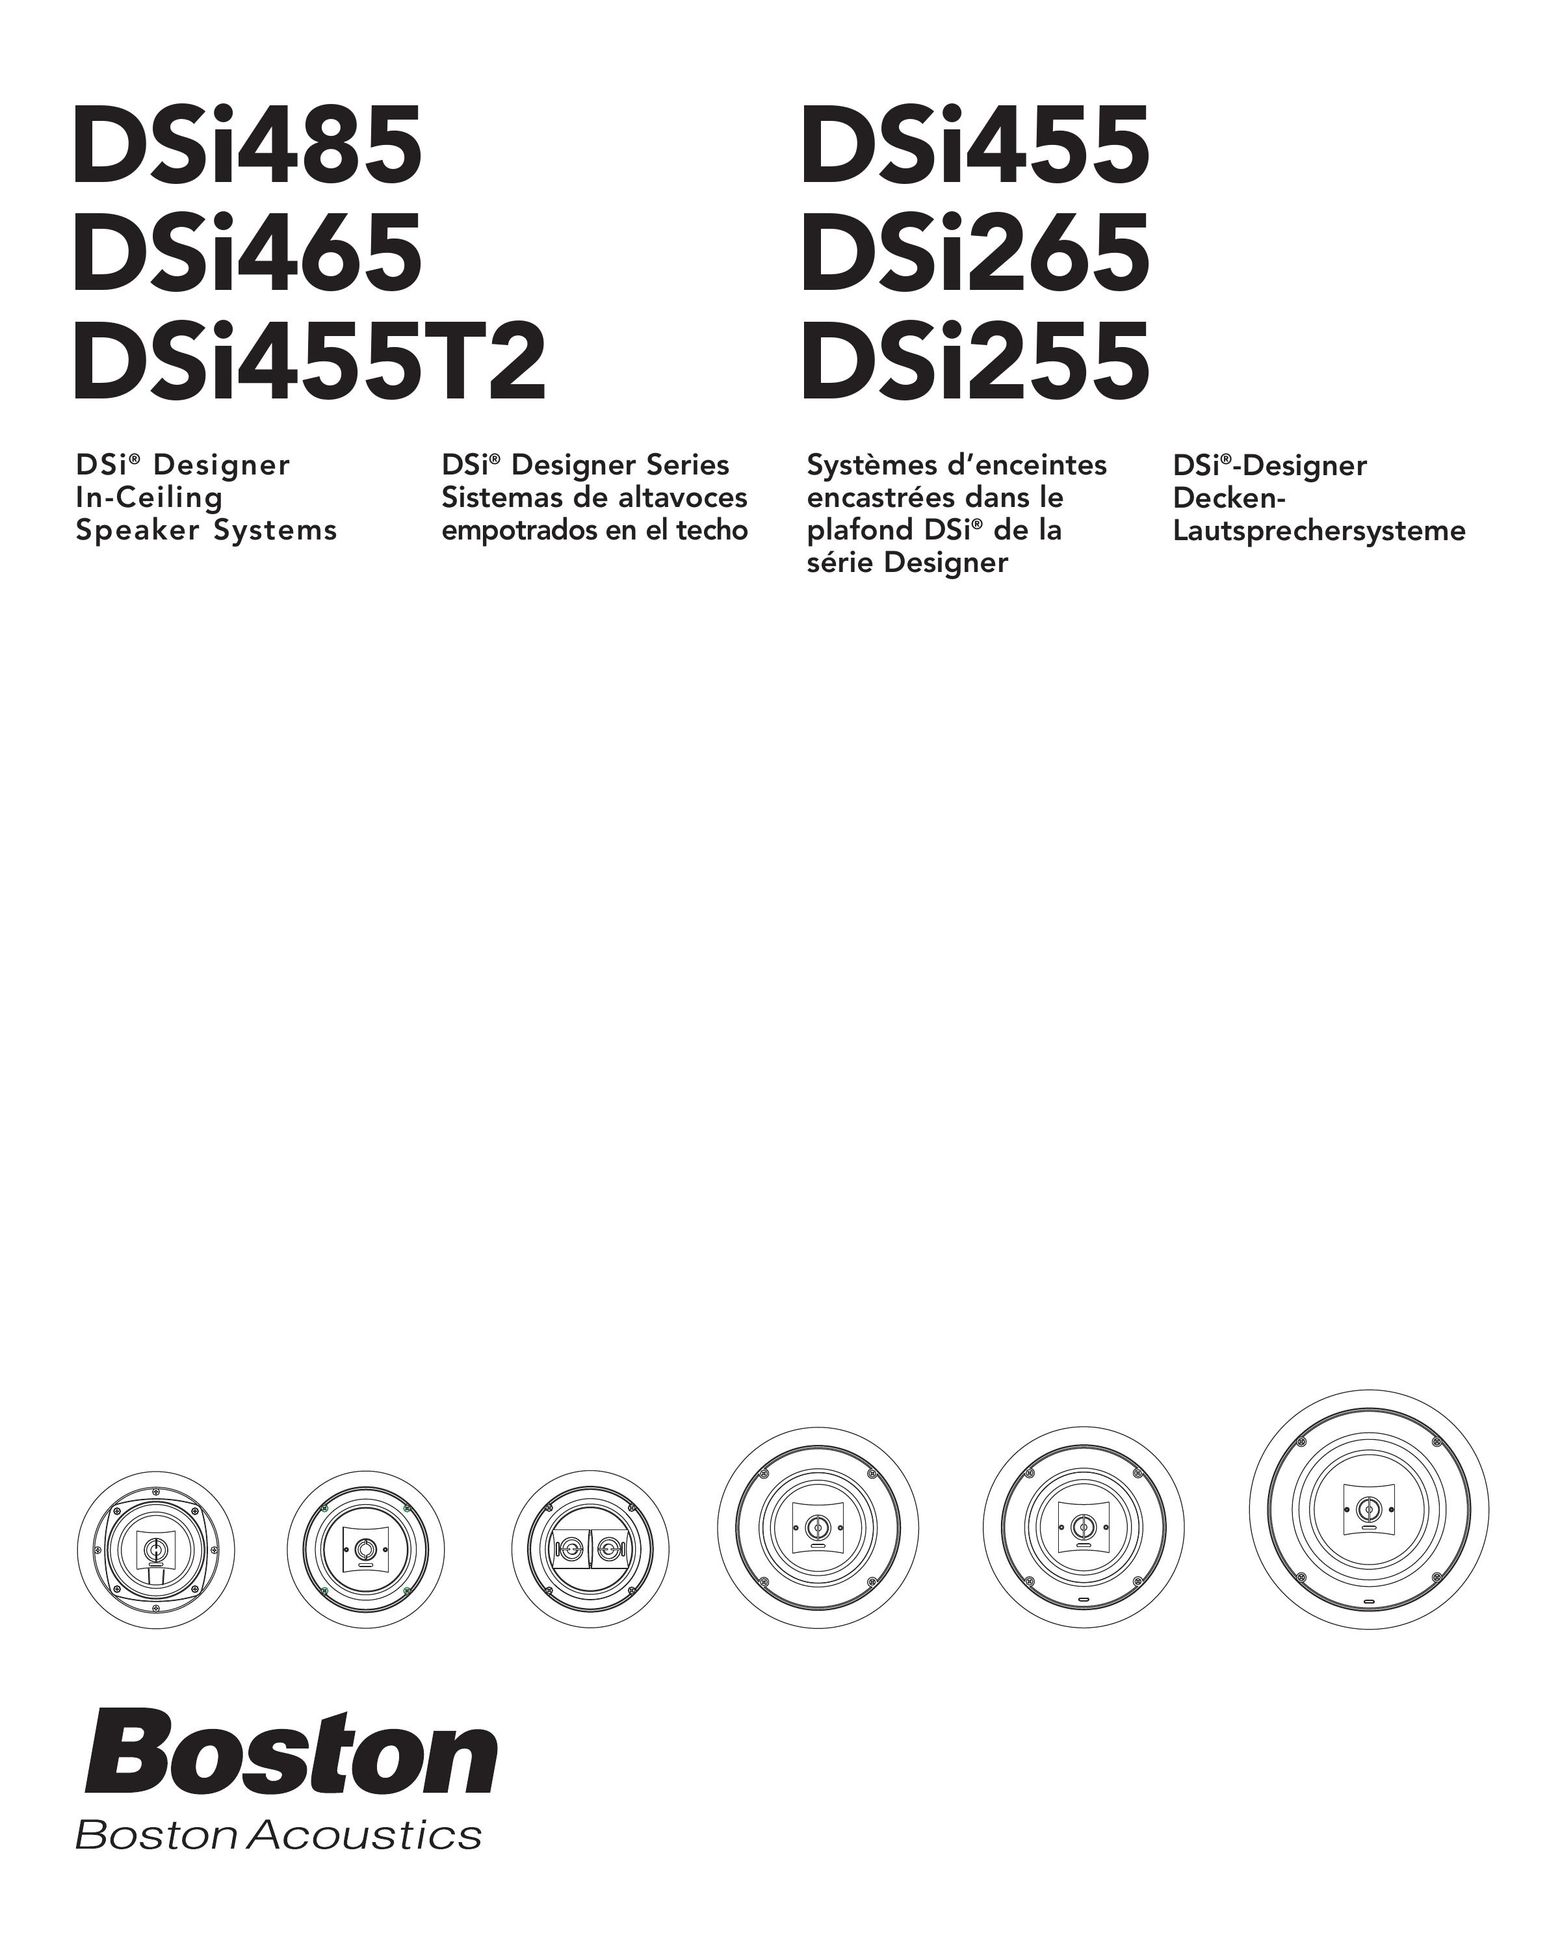 Boston Acoustics DSI455 Computer Drive User Manual